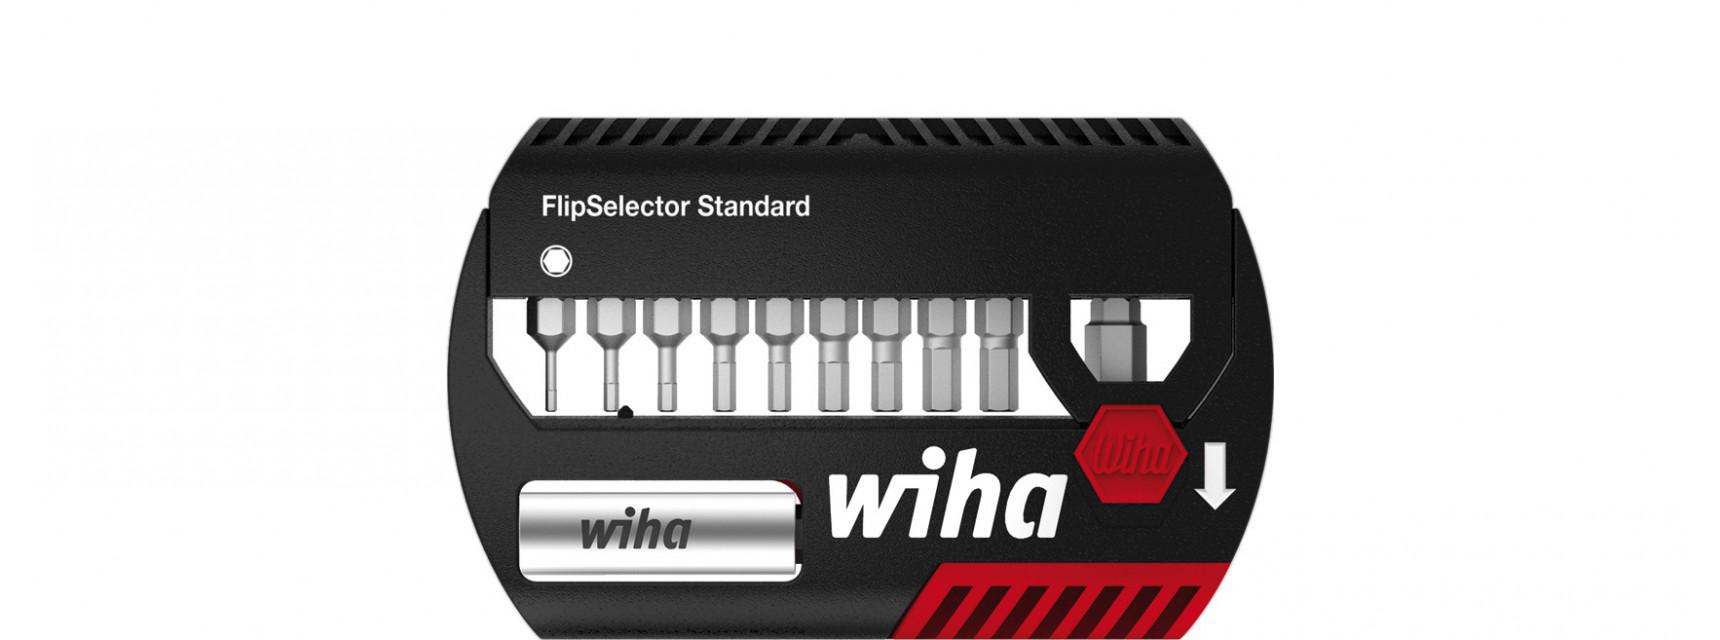 Набор бит FlipSelector Standard 25 мм SB 7947-902 WIHA 39059